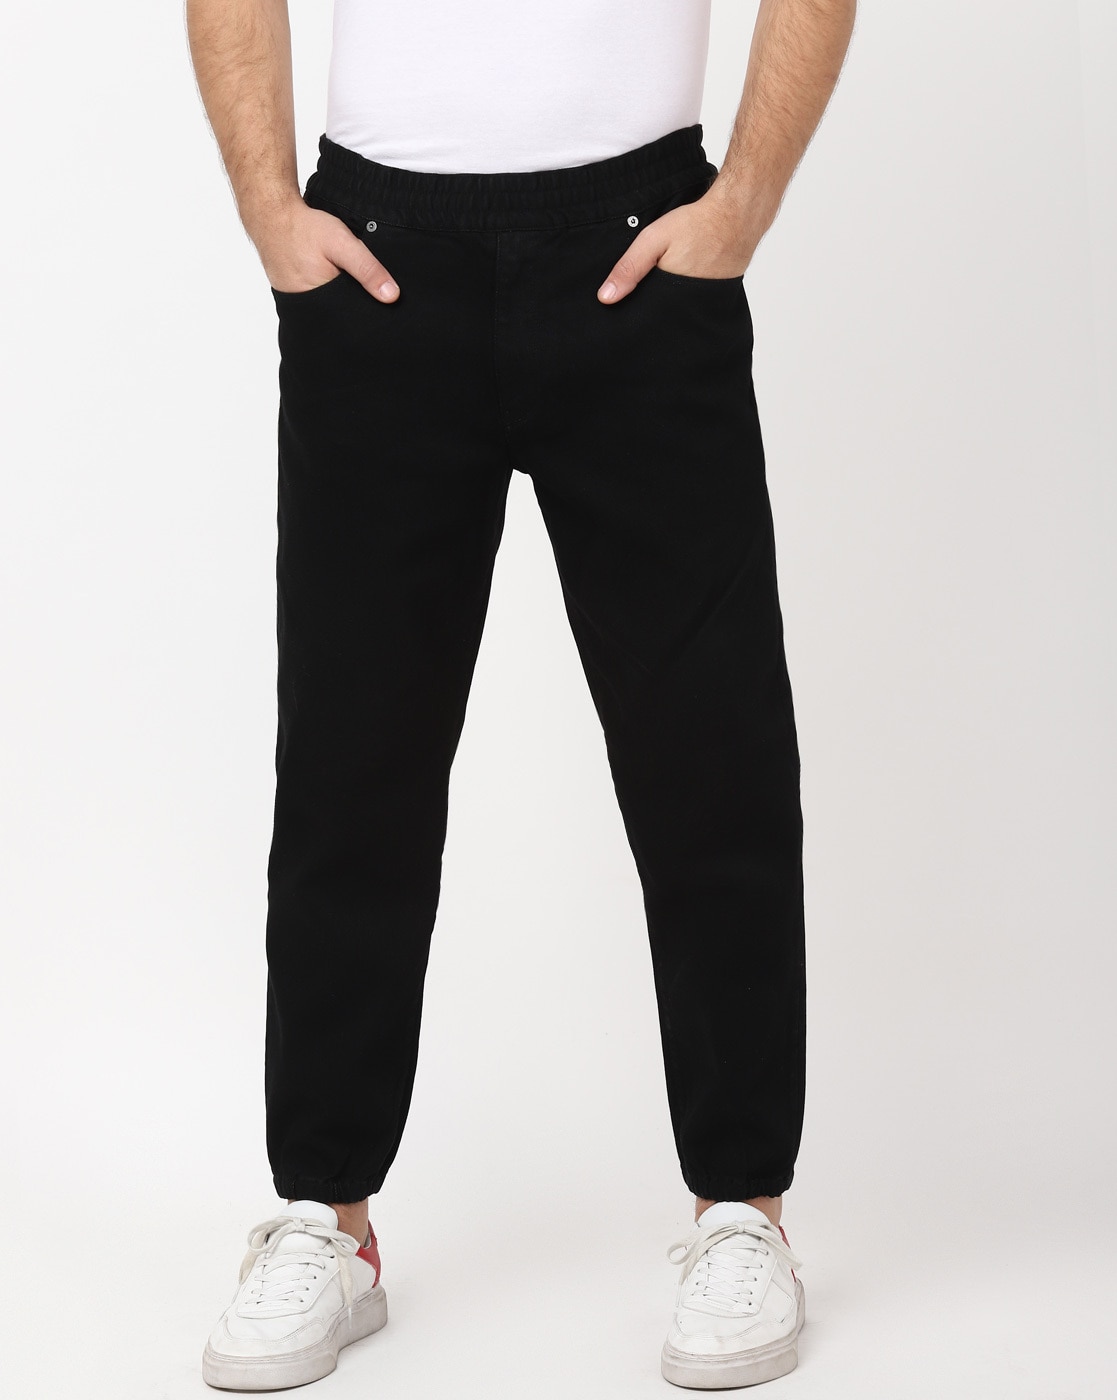 Buy Black Jeans for Men by ARMANI EXCHANGE Online 